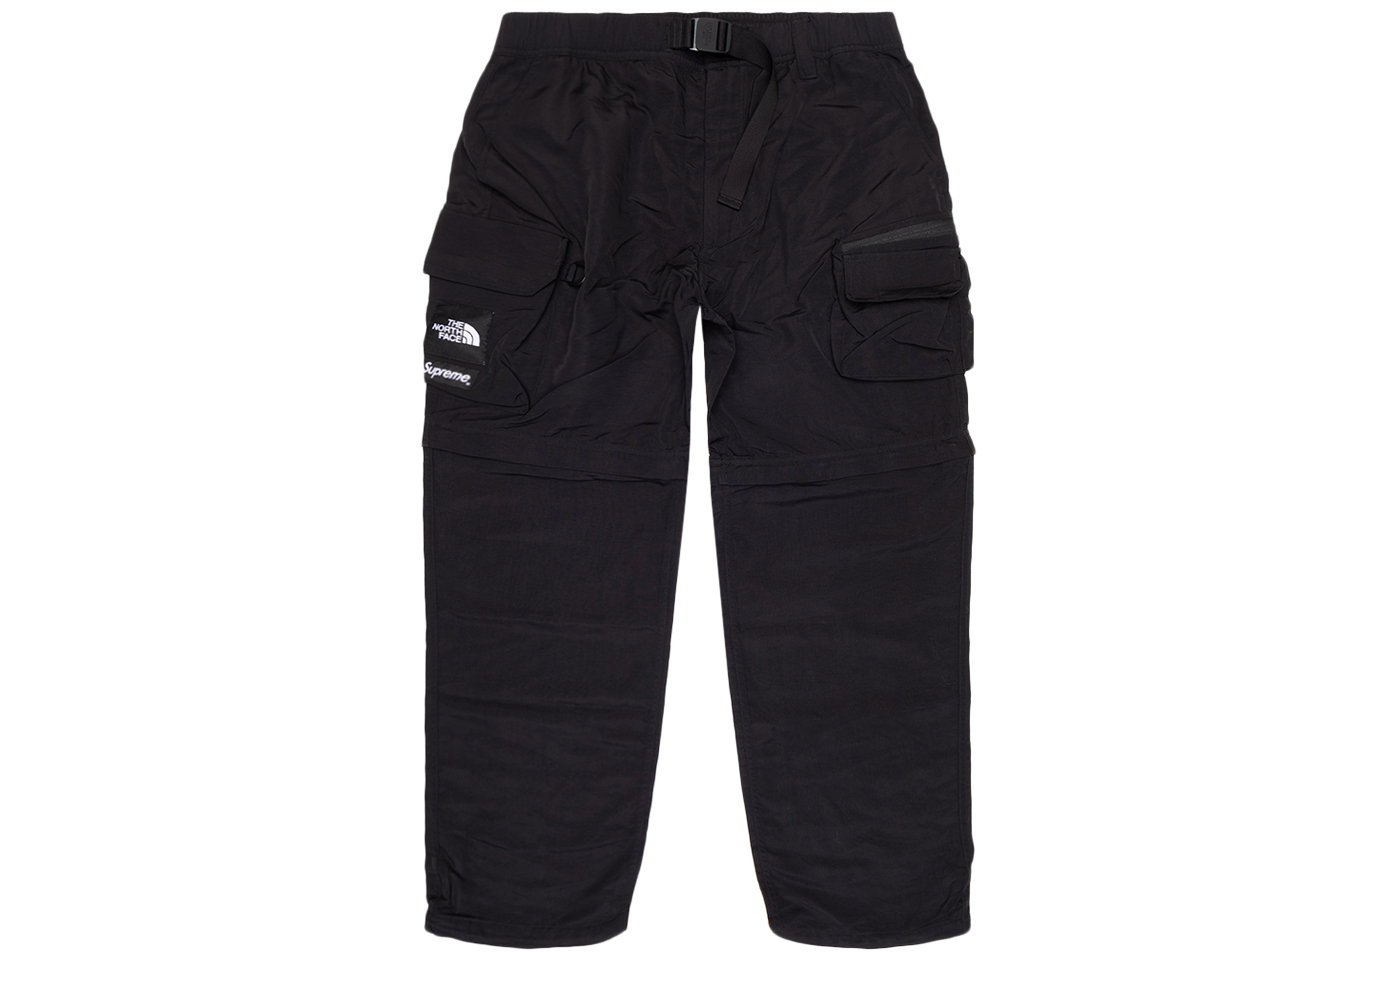 THE NORTH FACE - Men's Convertible Trousers - Men's Convertible Trousers to  Shorts - Waterproof Work or Hiking Trousers - TNF Black, UK 30 :  Amazon.co.uk: Fashion